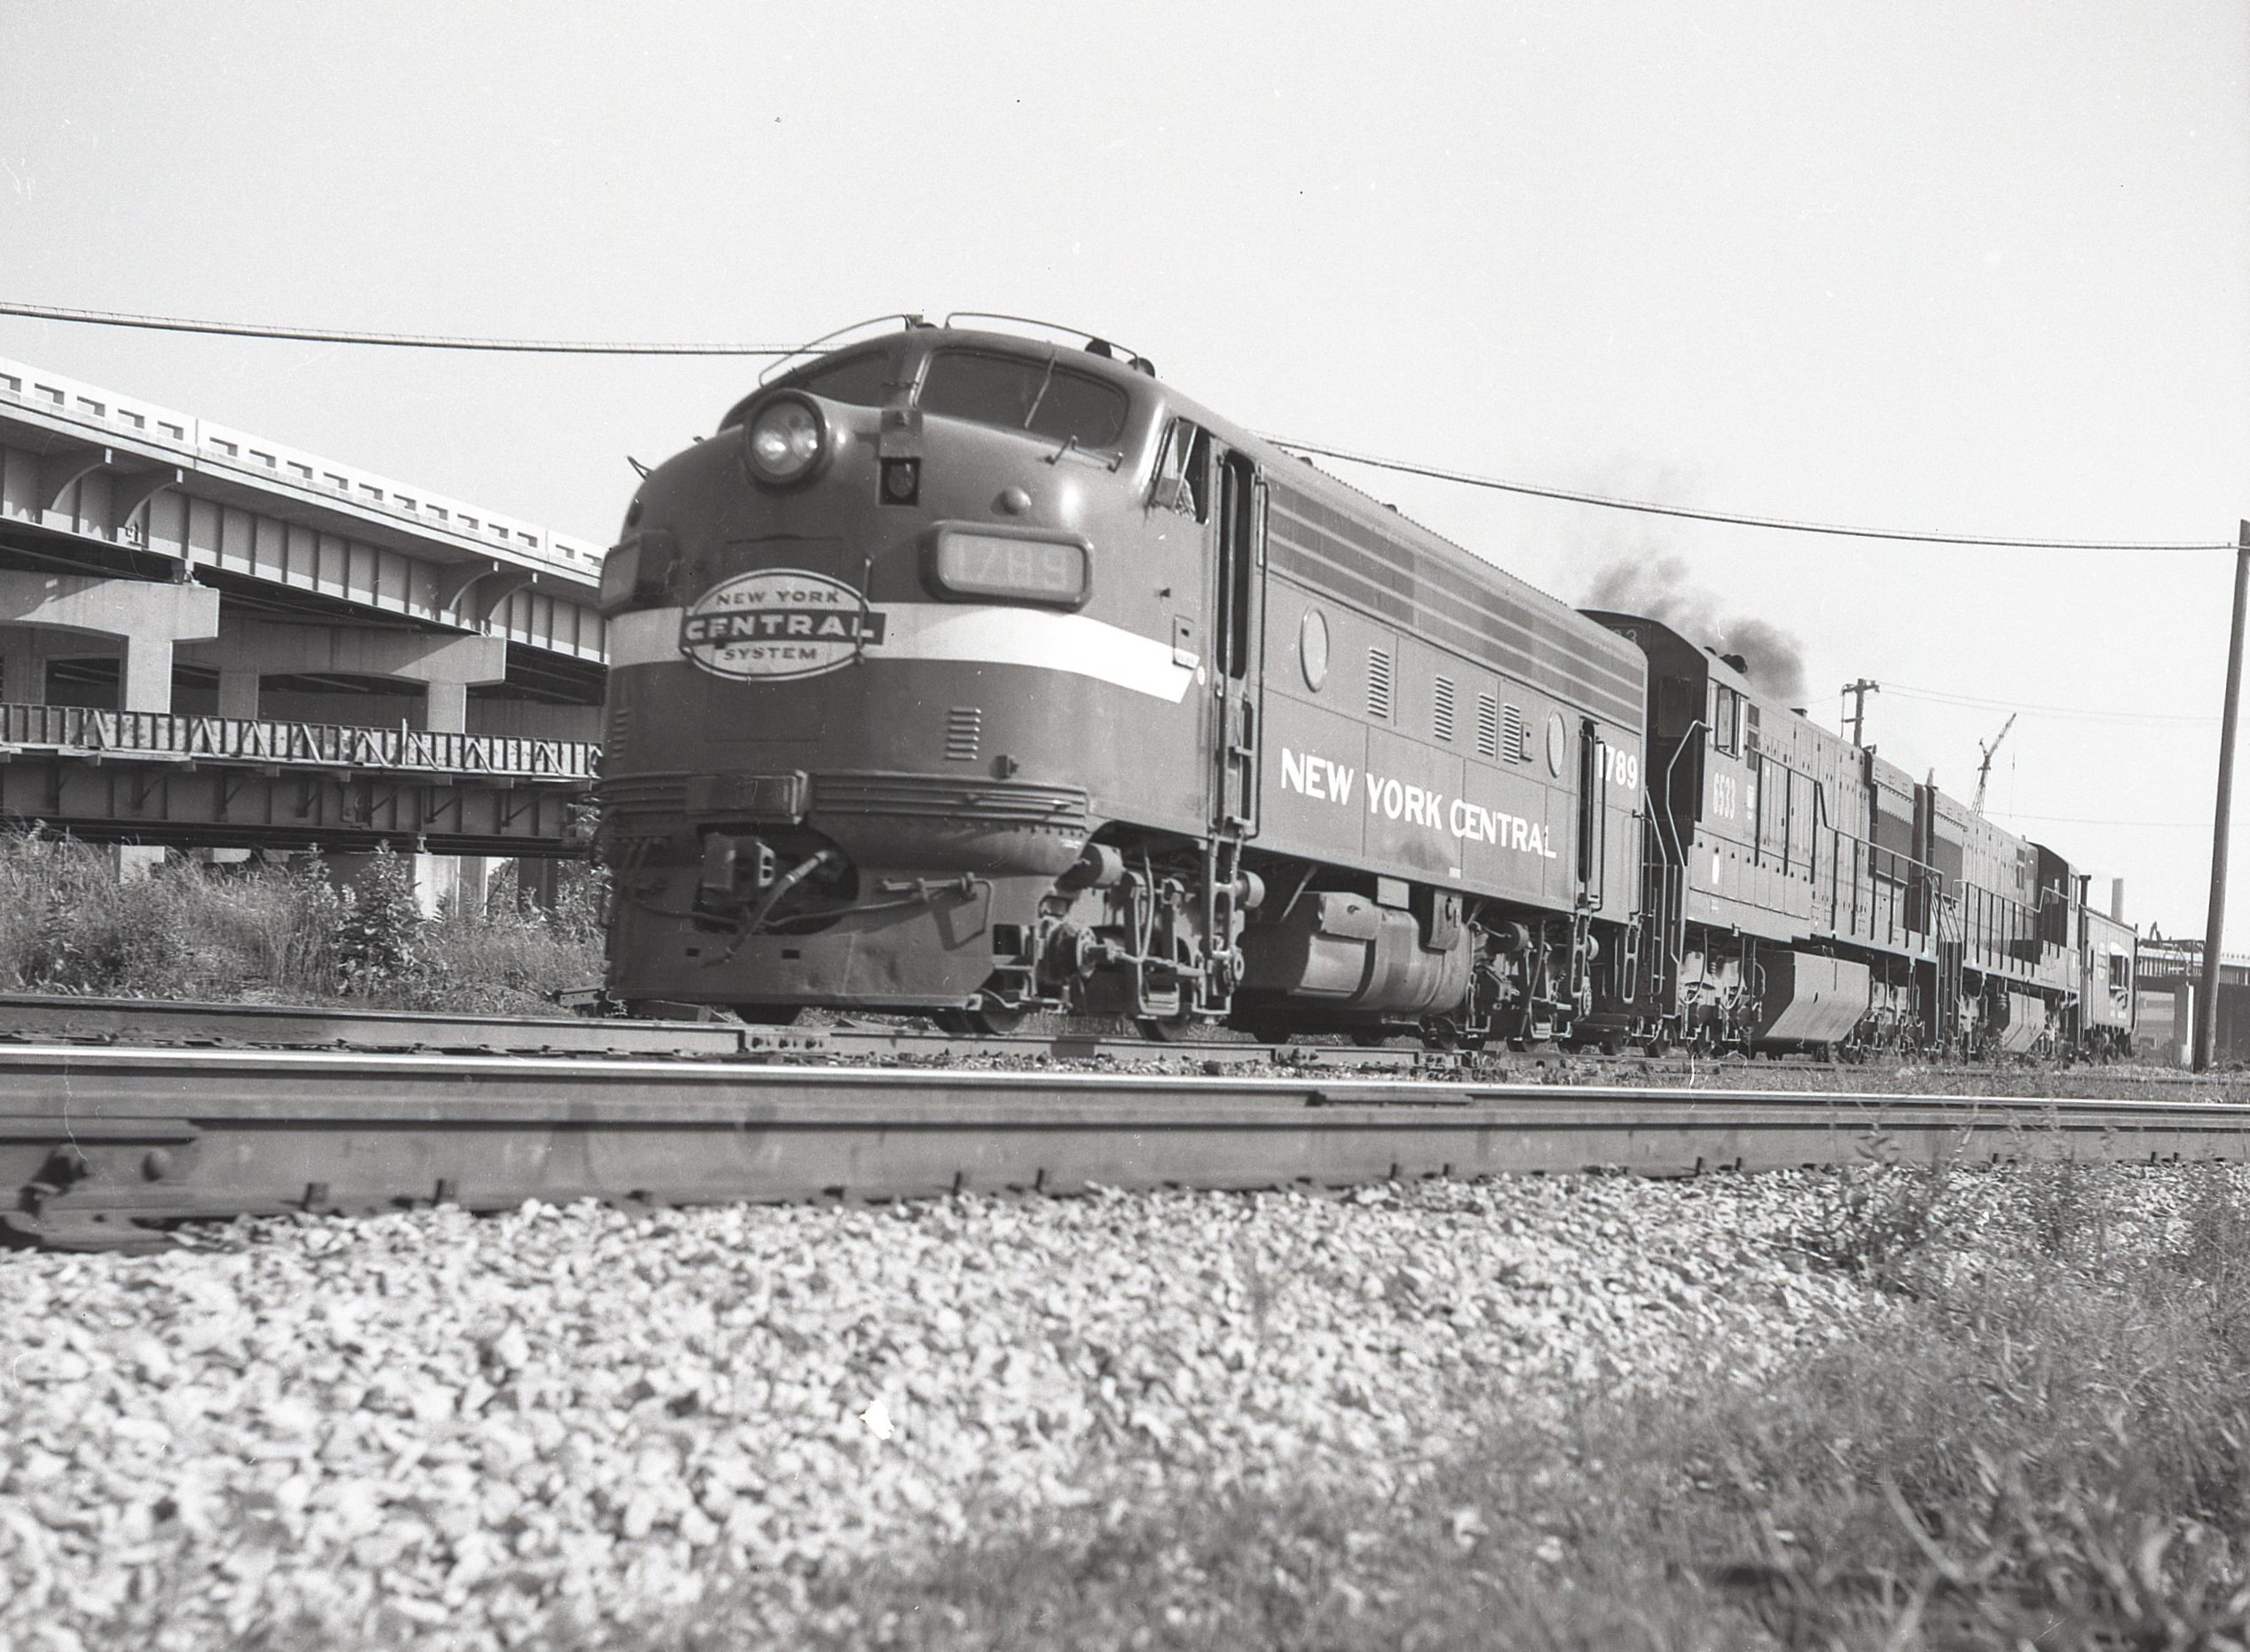 New York Central | Detroit, Michigan | F7a 1789 + PRR U28C 6533 + 1 + caboose | 1970 | Elmer Kremkow photograph